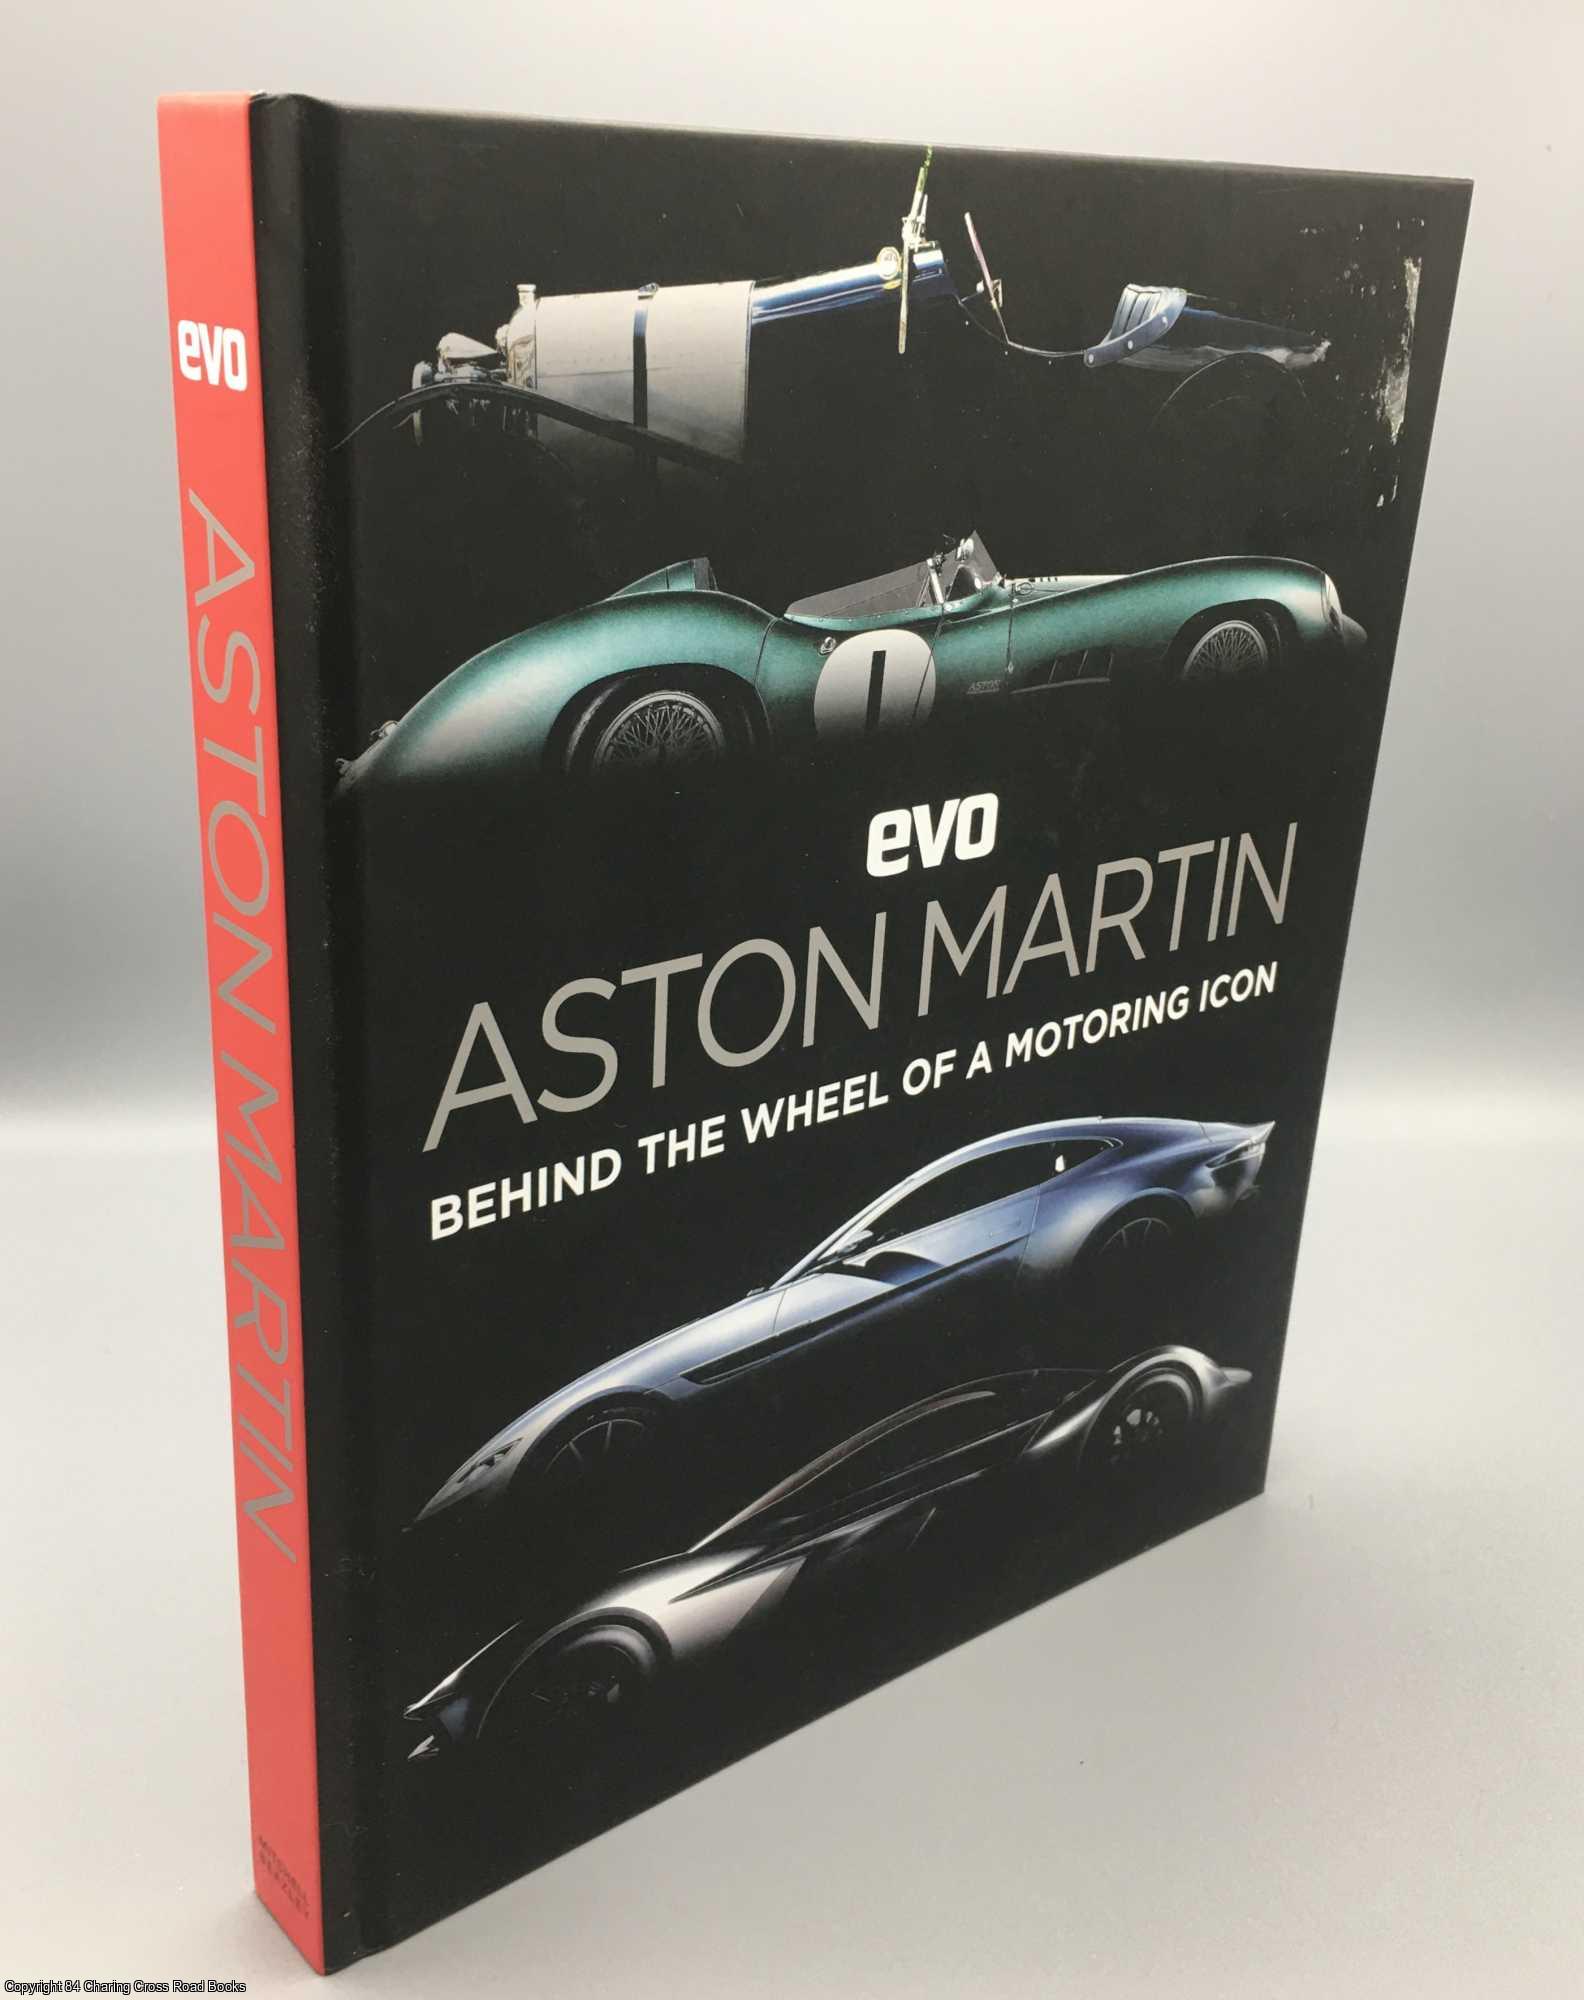  - Evo Aston Martin - Behind The Wheel of a Motoring Icon